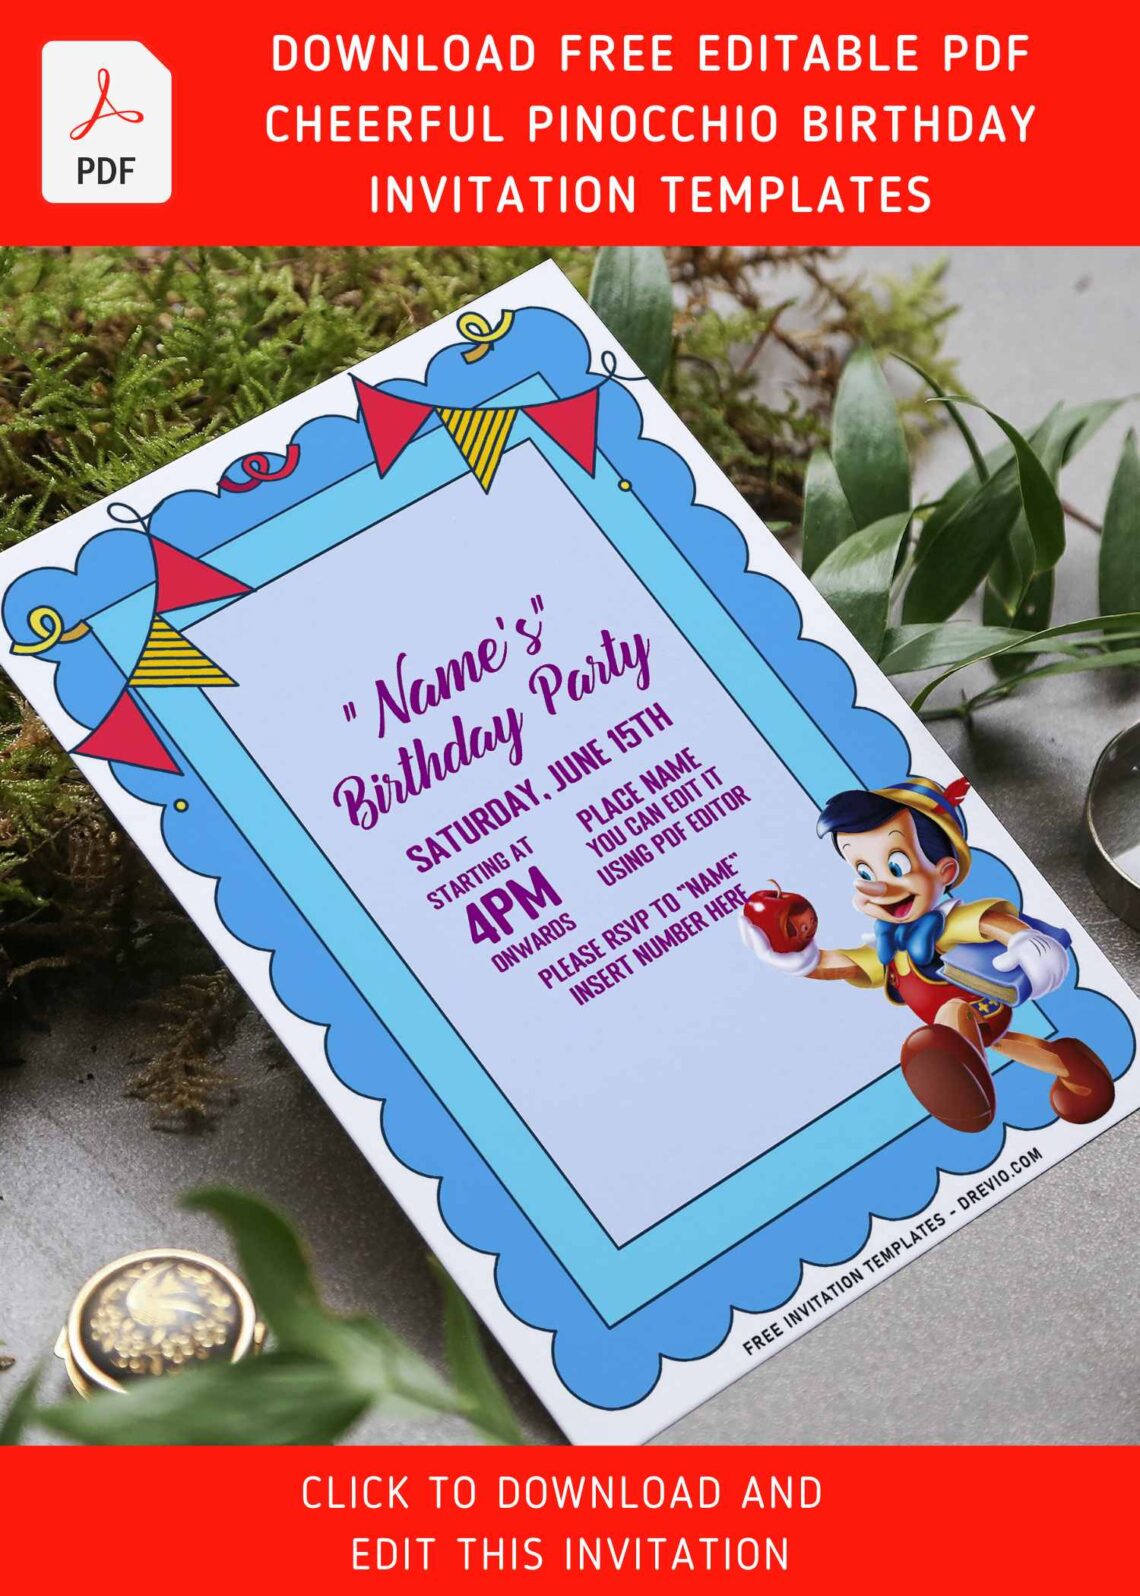 (Free Editable PDF) Cheerful Pinocchio Birthday Invitation Templates